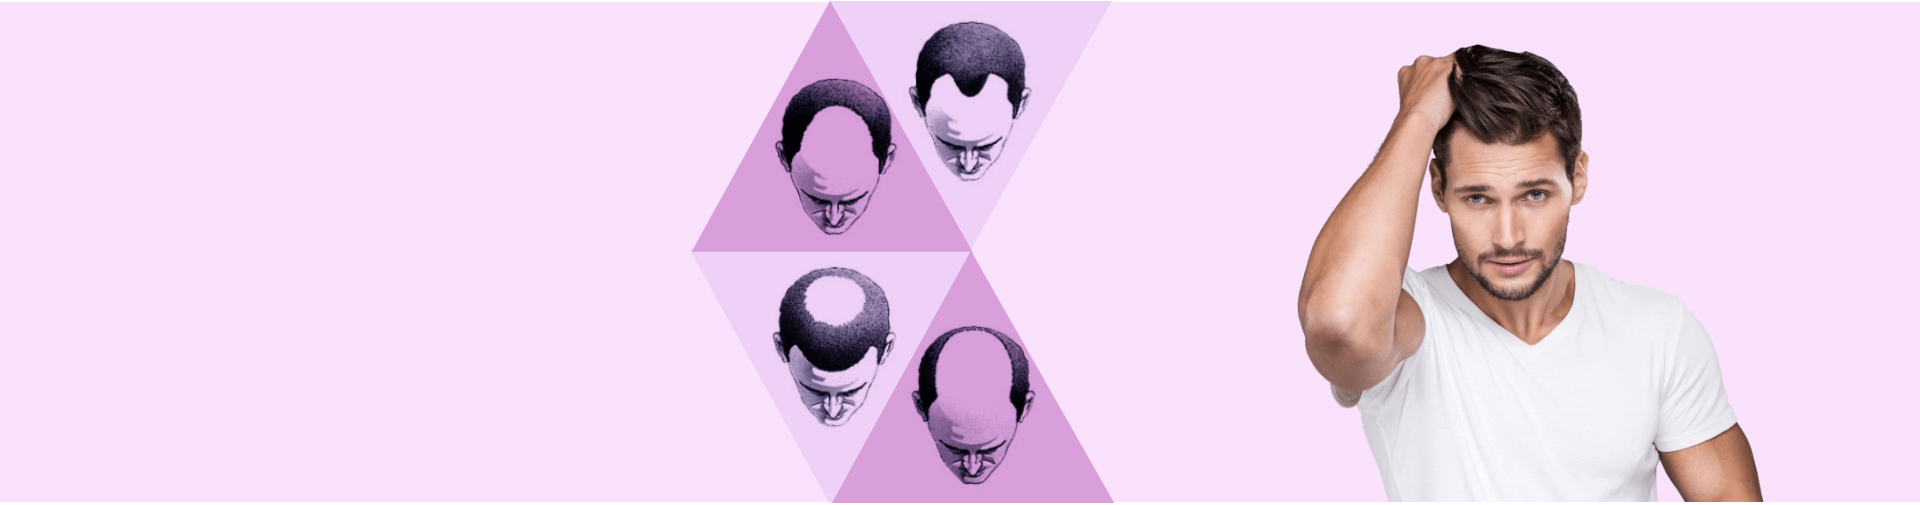 types of baldness at kiara clinic in east delhi banner